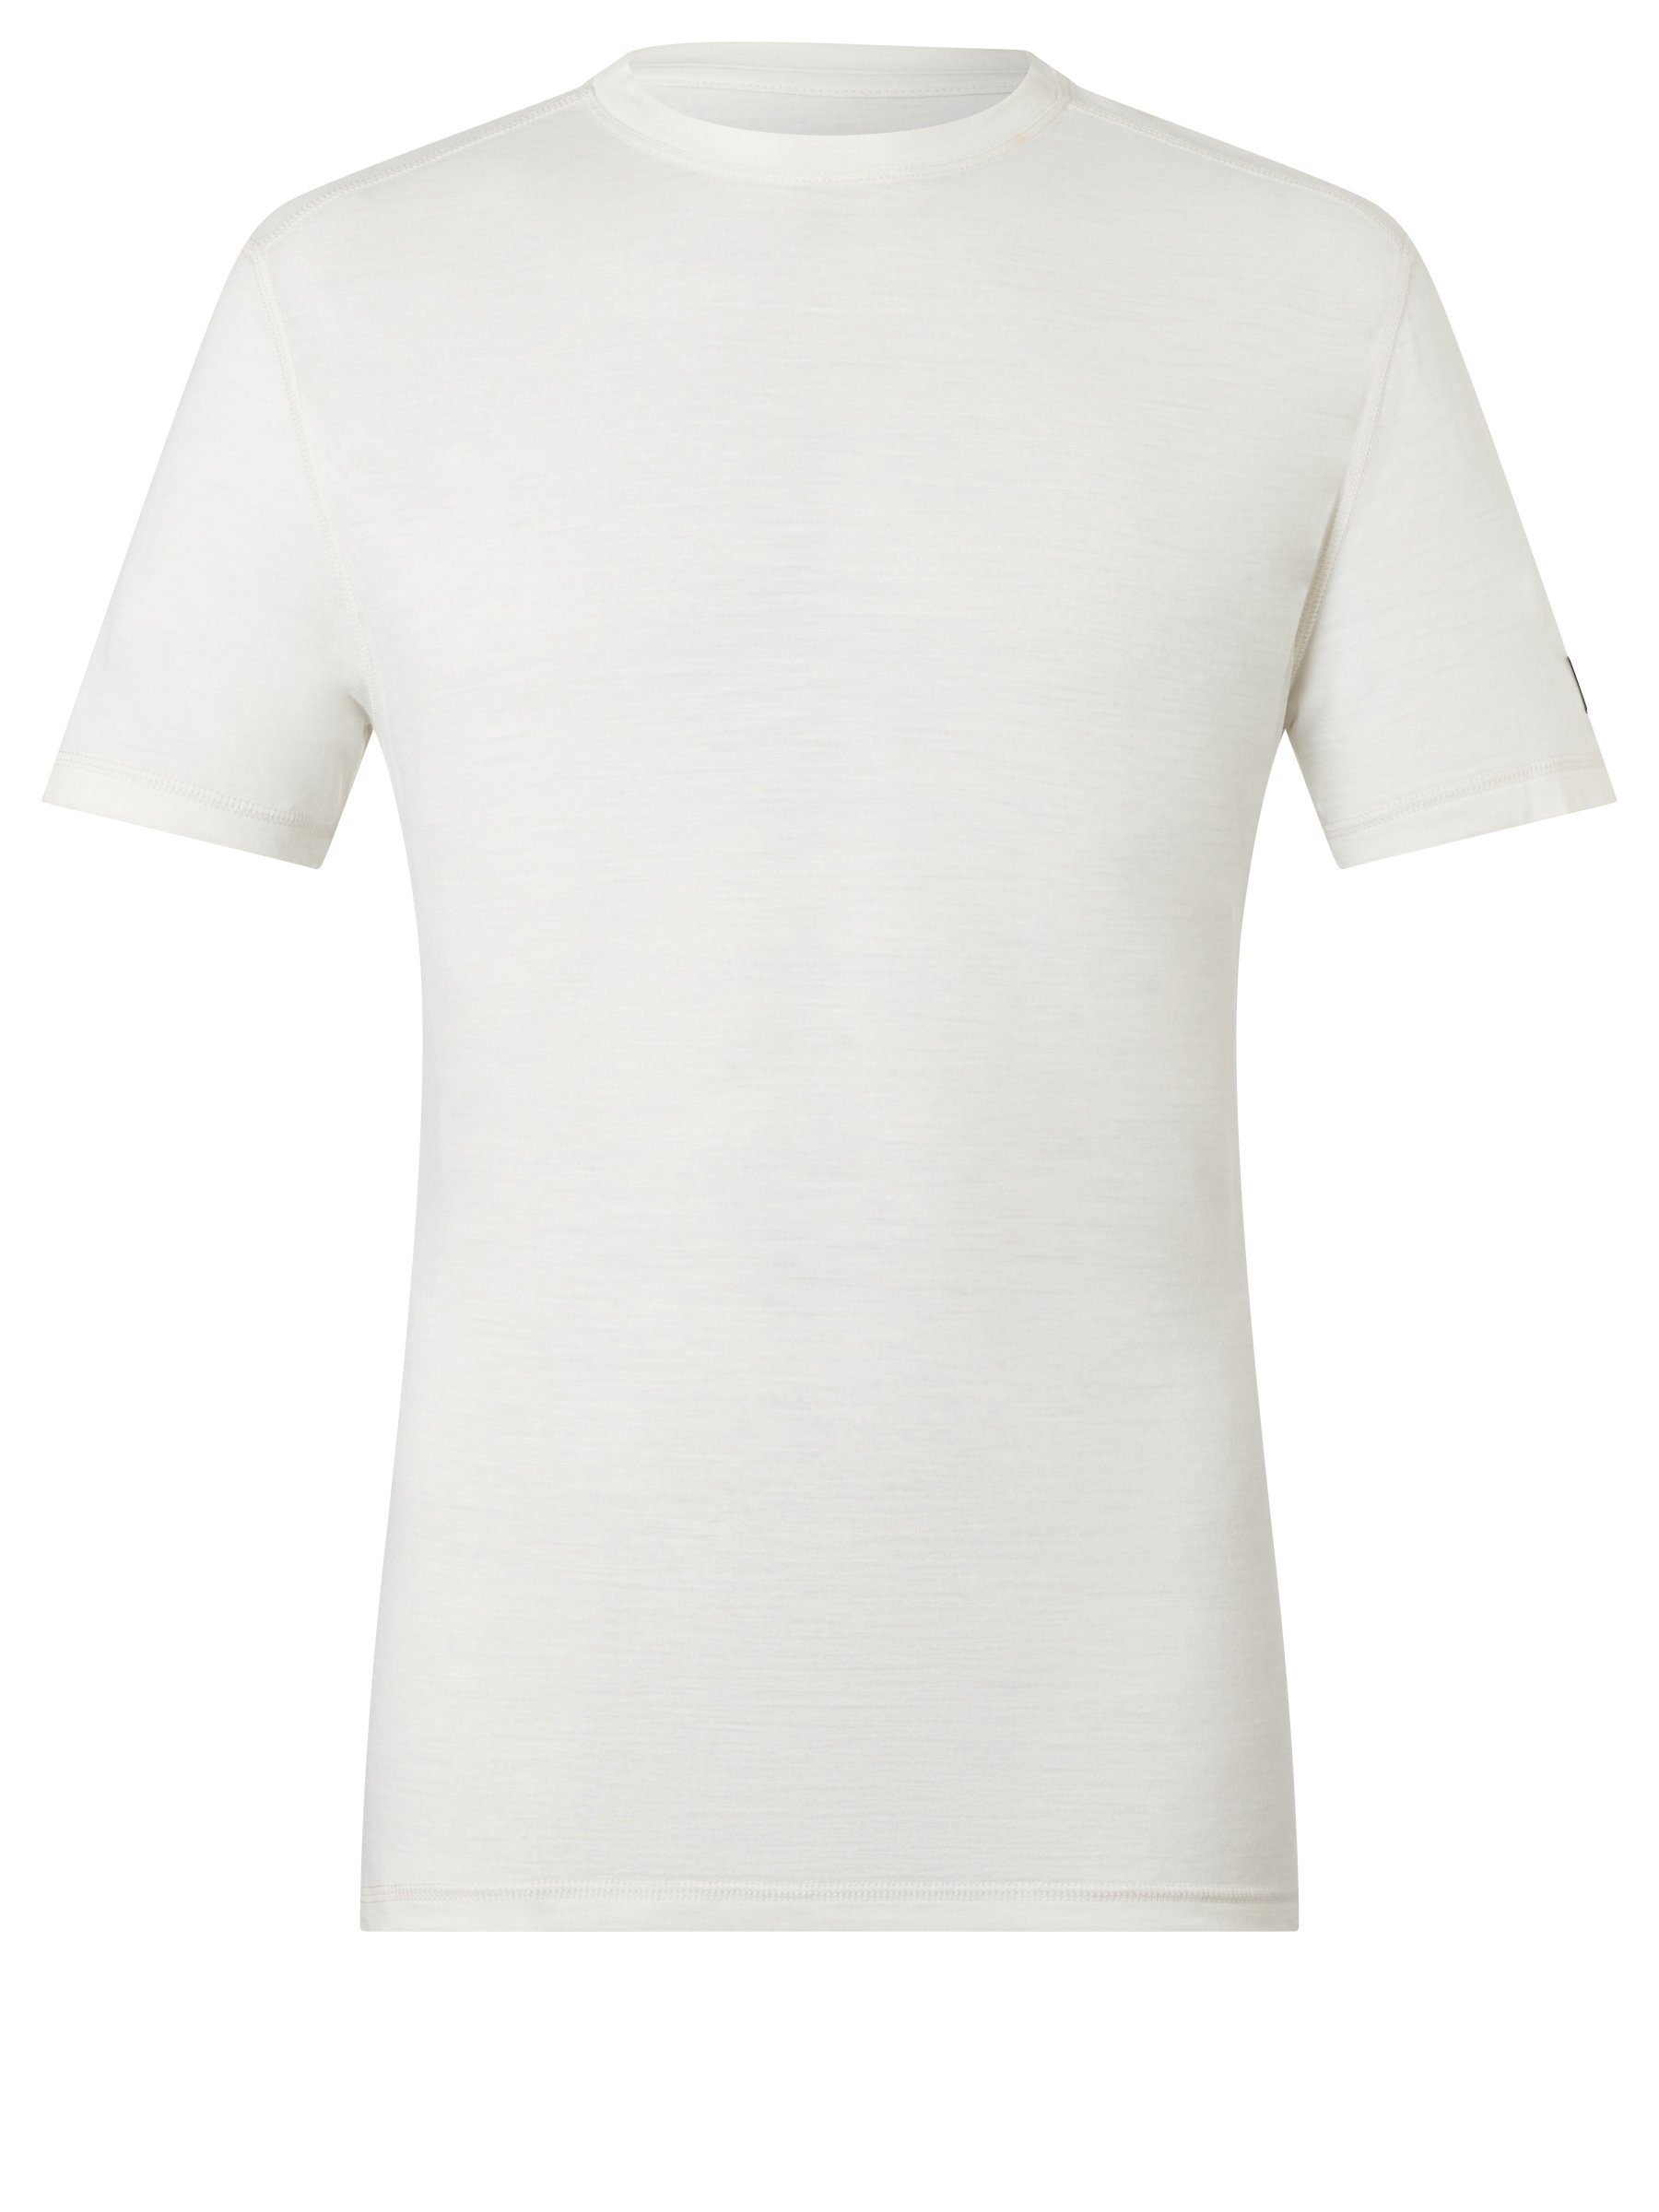 SUPER.NATURAL Funktionsshirt funktioneller TEE M Fresh White T-Shirt Merino-Materialmix SIERRA140 Merino